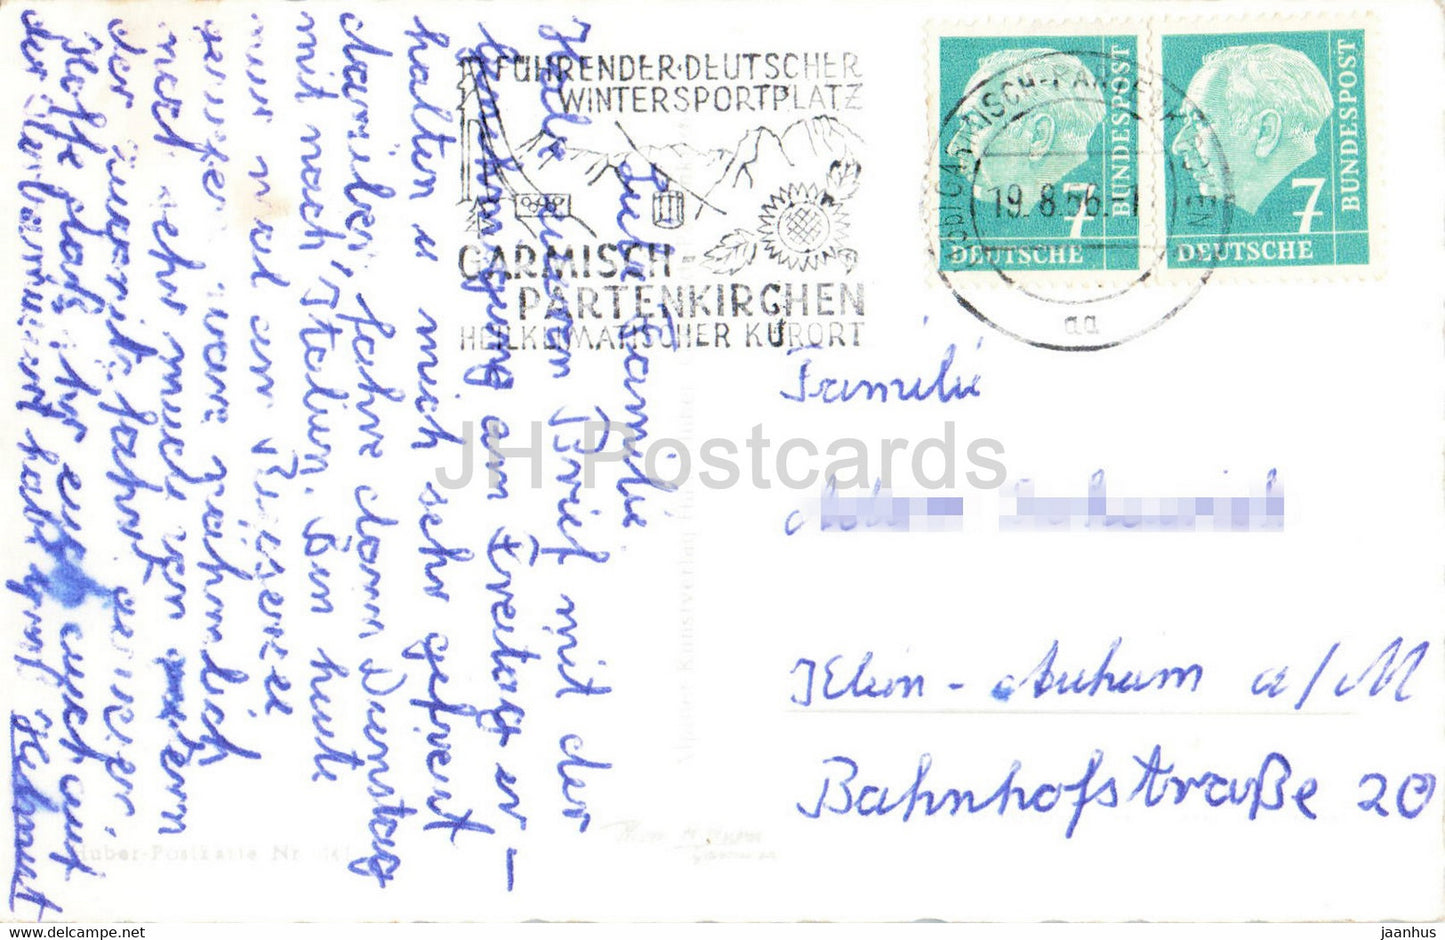 Riessersee gegen Zugspitzgruppe - carte postale ancienne - 1956 - Allemagne - utilisé